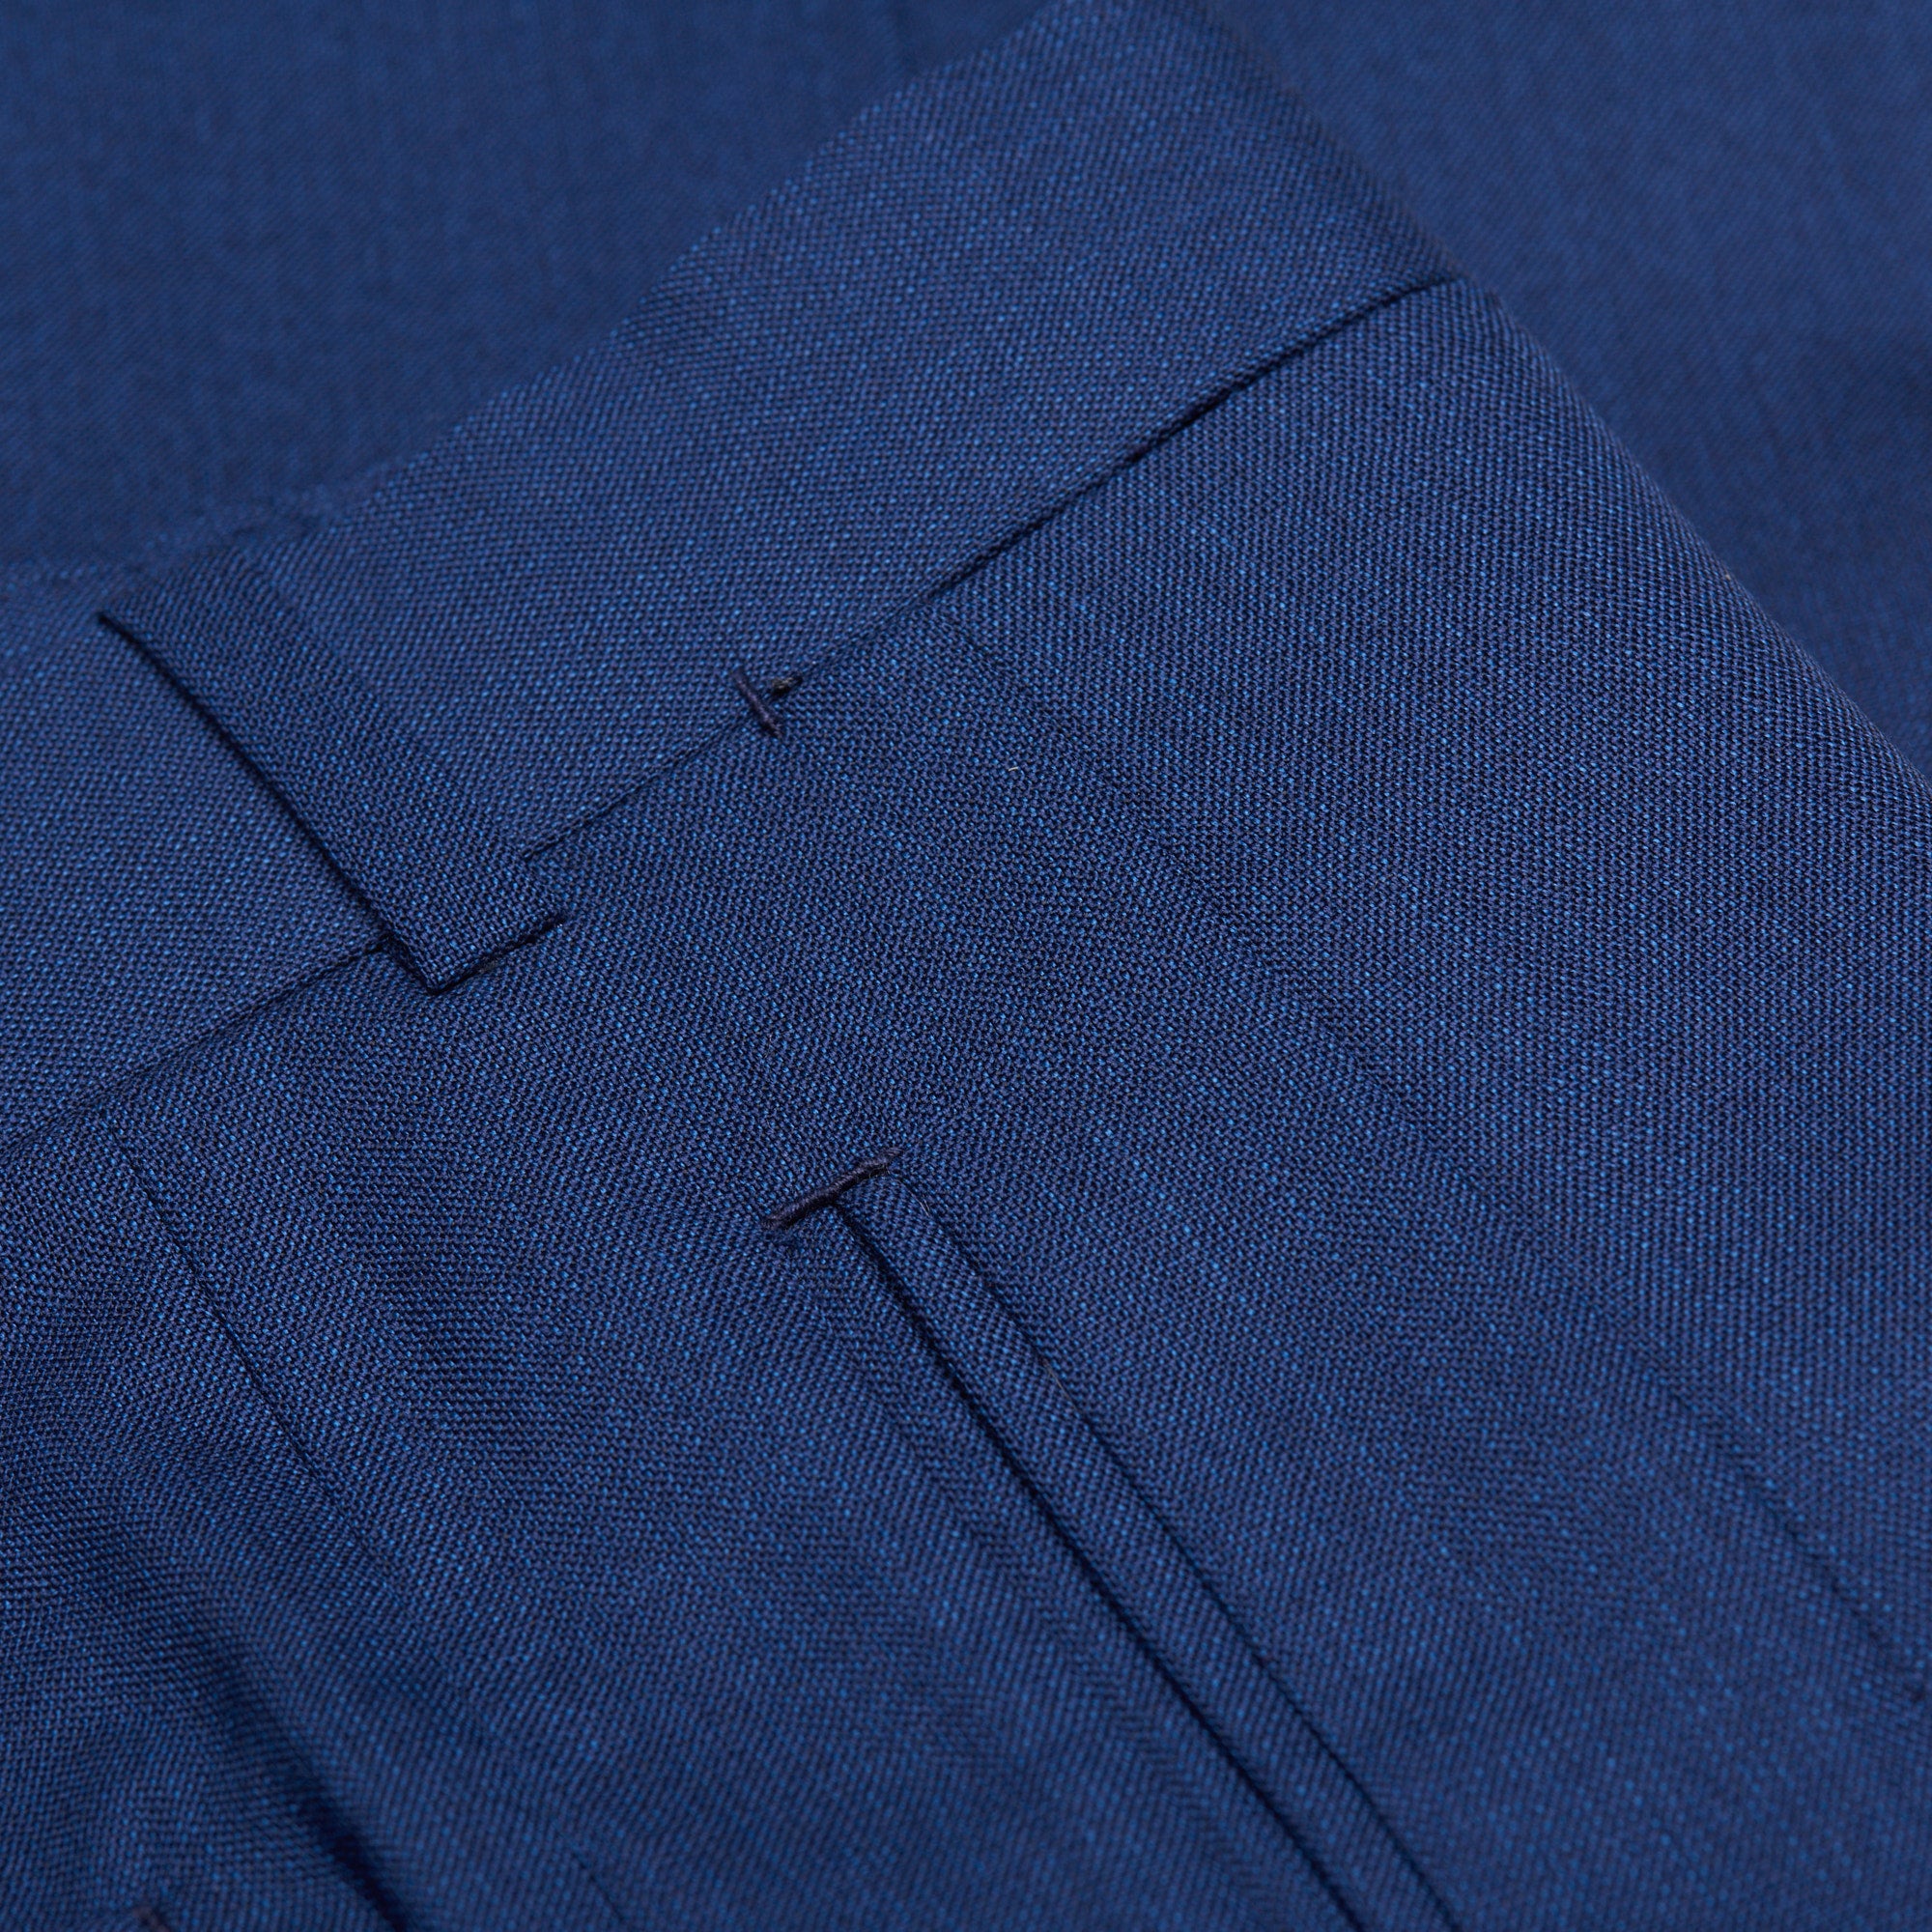 BESPOKE ATHENS Handmade Blue Wool-Mohair Flat Front Pants EU 50 NEW US 34 BESPOKE ATHENS